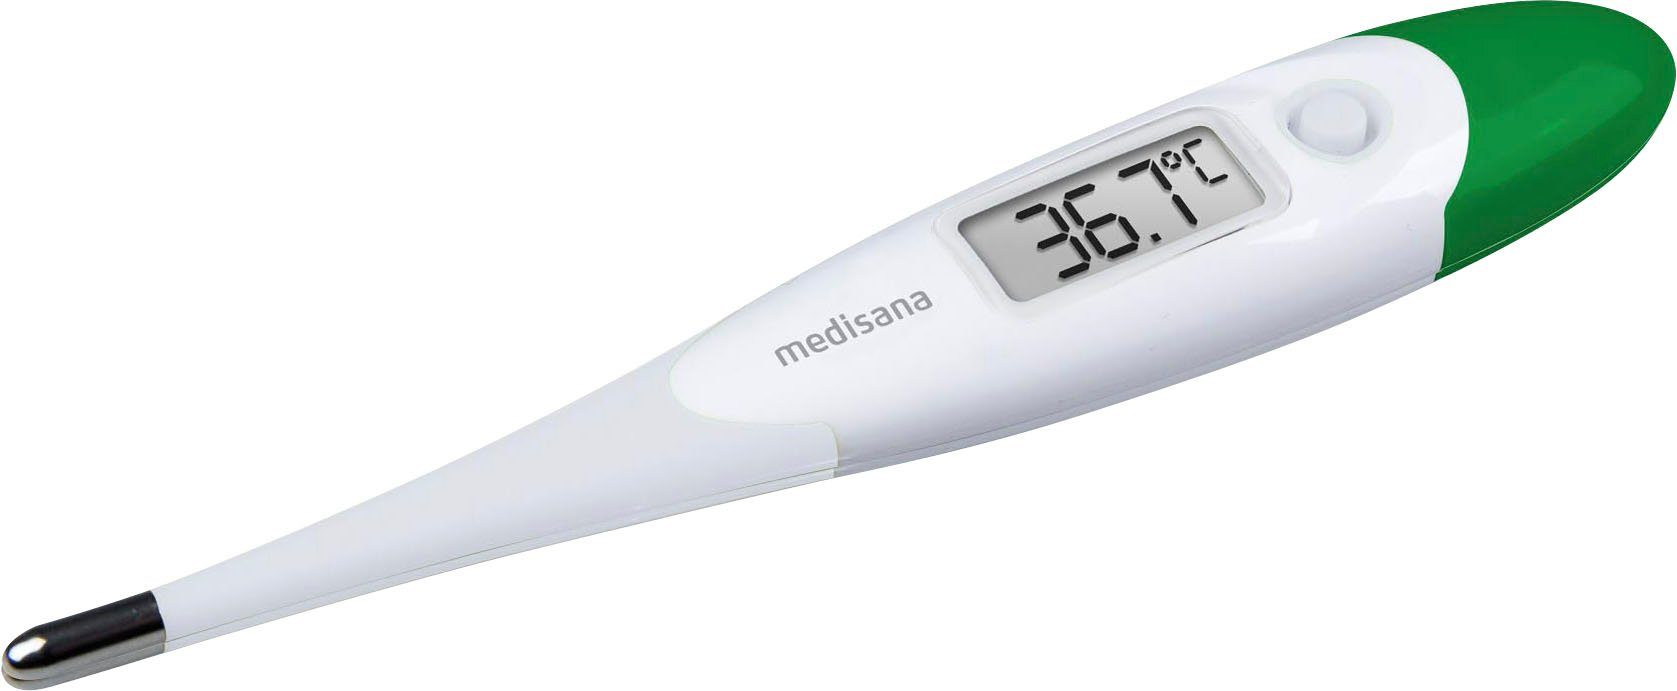 Fieberthermometer Medisana TM700